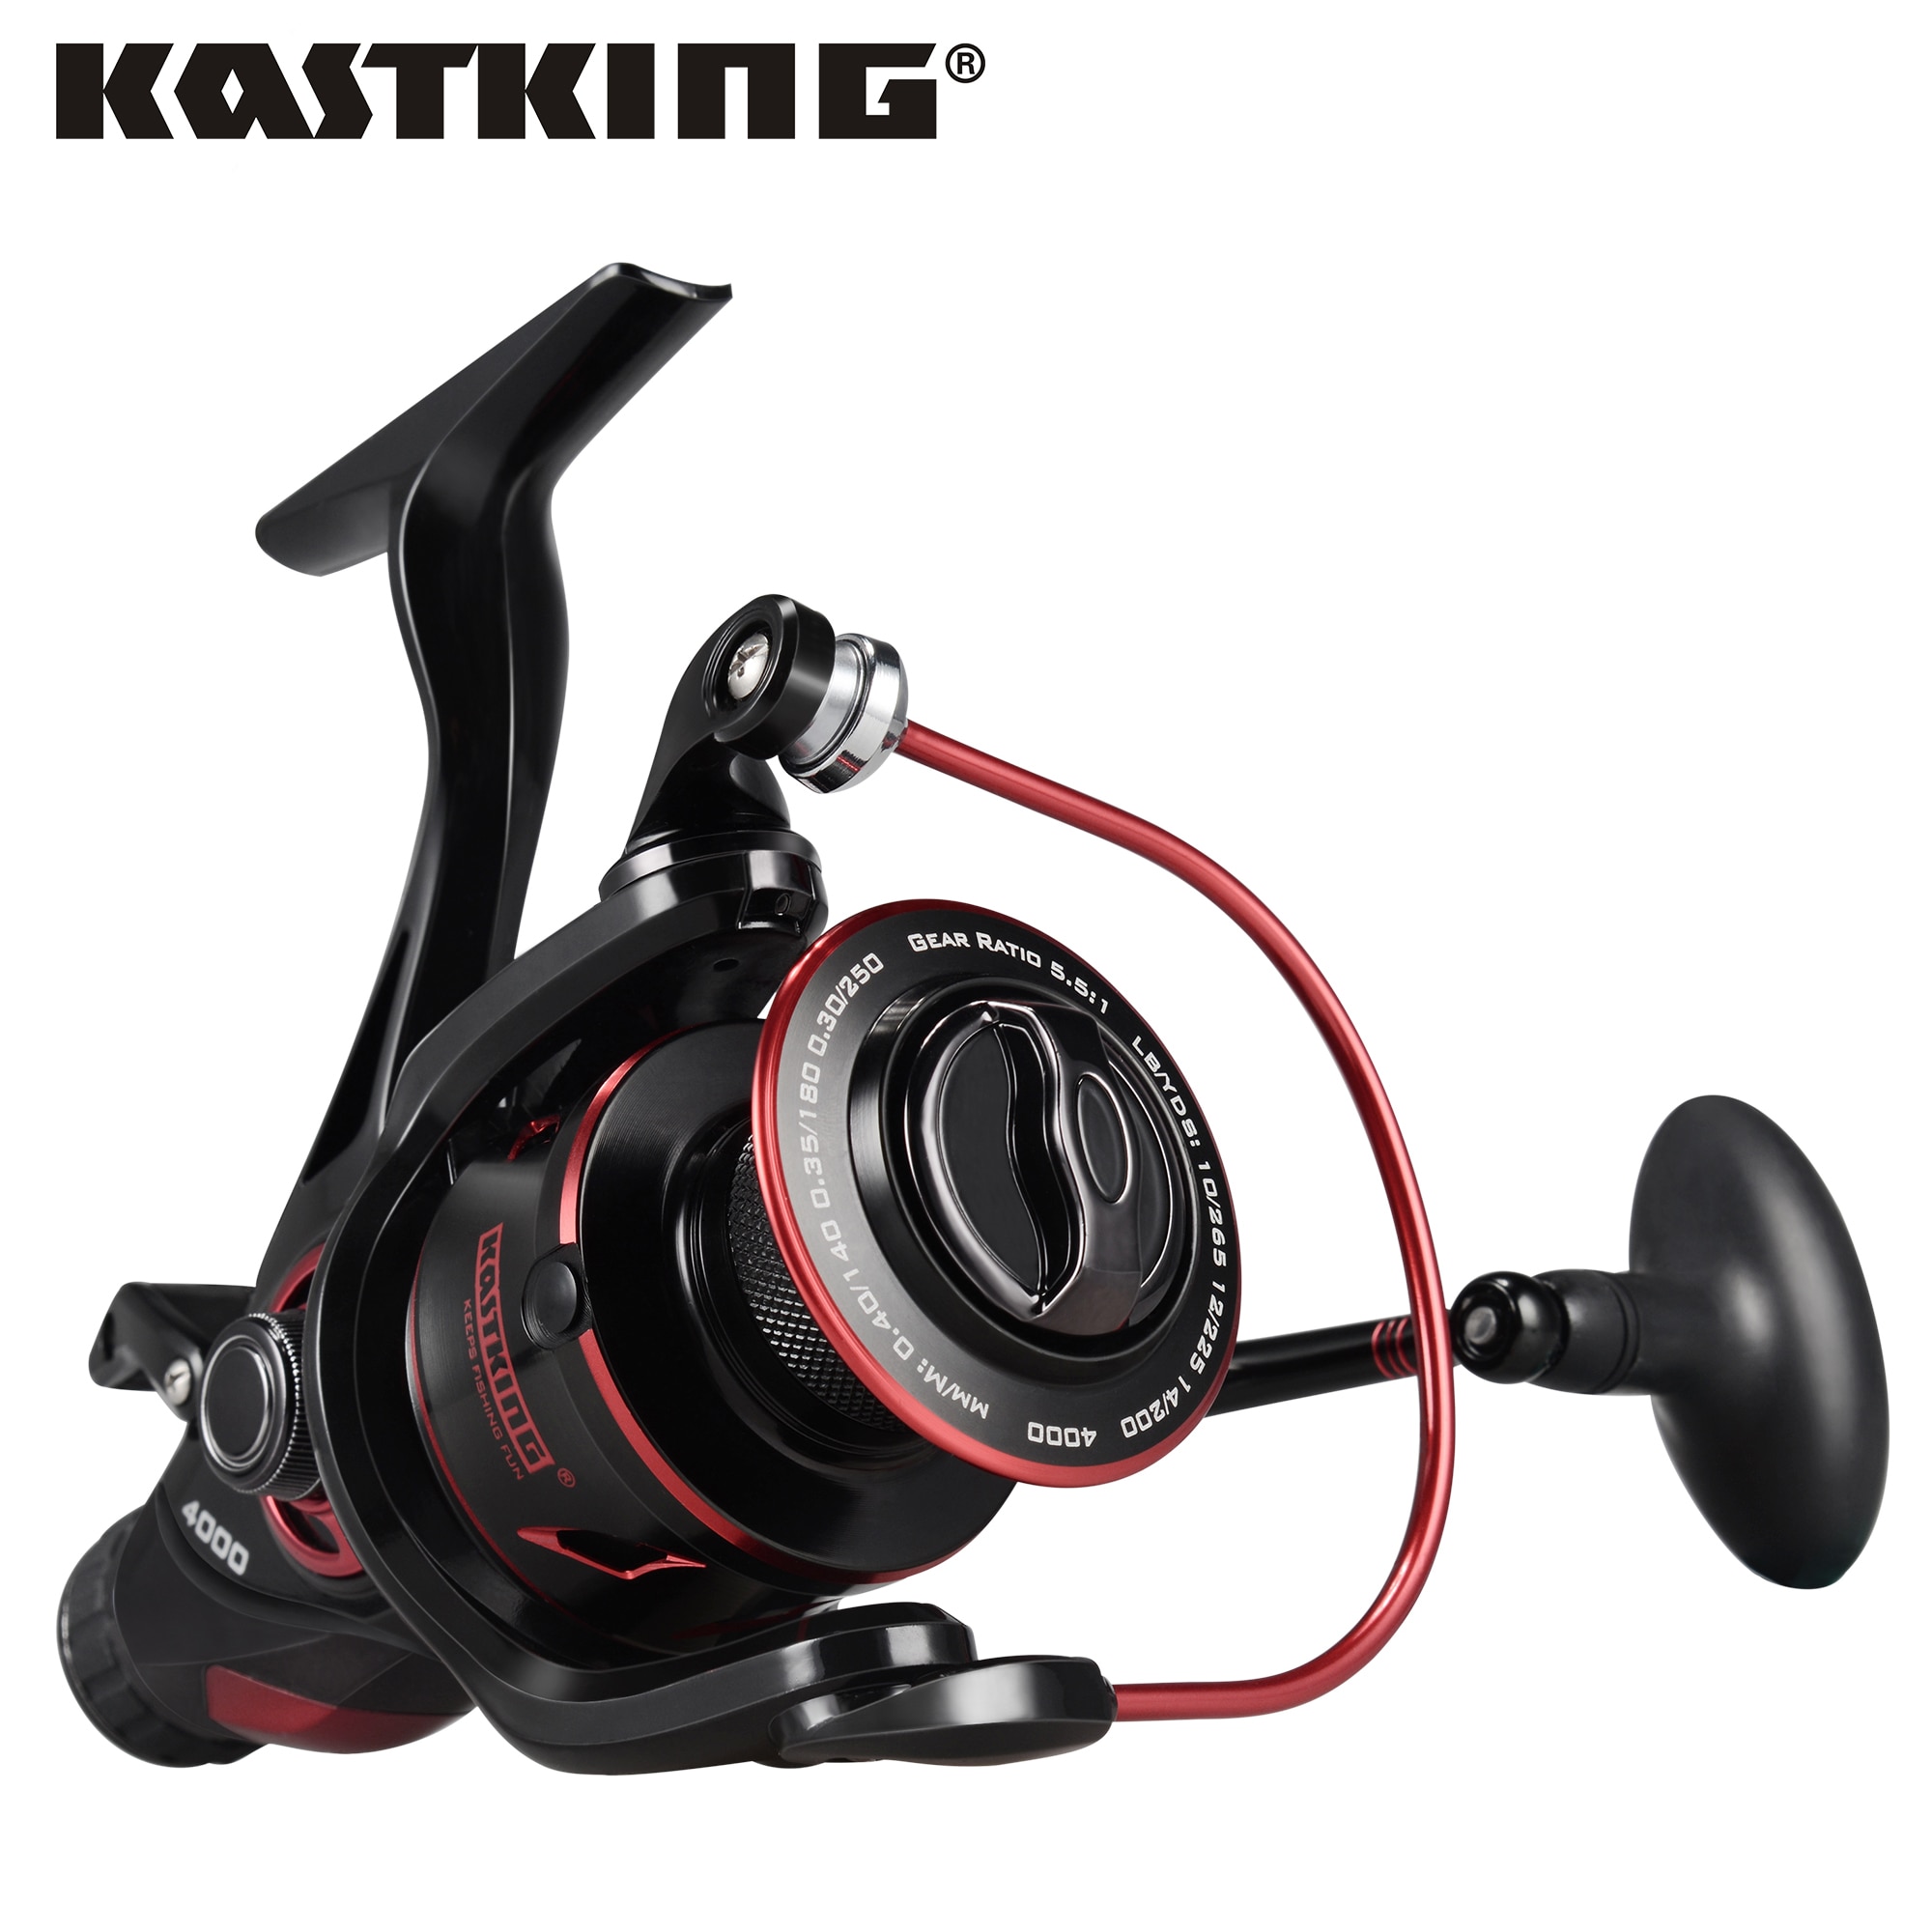 KastKing Brutus Baitcasting Reel Magnetic Braking System 7.2:1 Gear Ratio  5+1 Ball Bearings 8KG Max Drag Fishing Coil